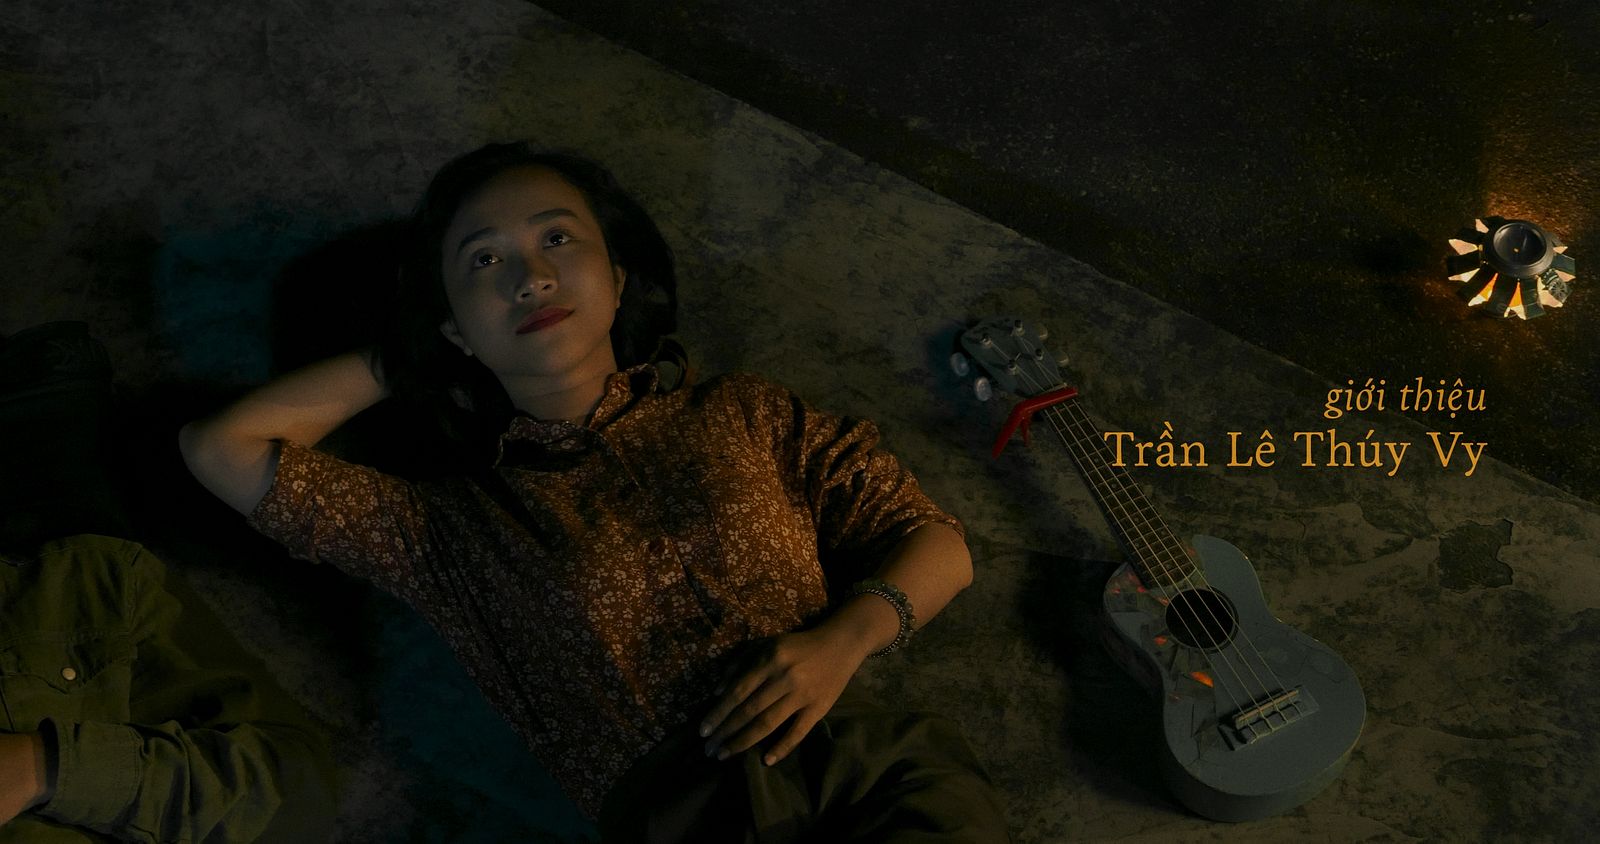 Review: When Indie Music Meets Indie Cinema on a Grab in Saigon - Saigoneer